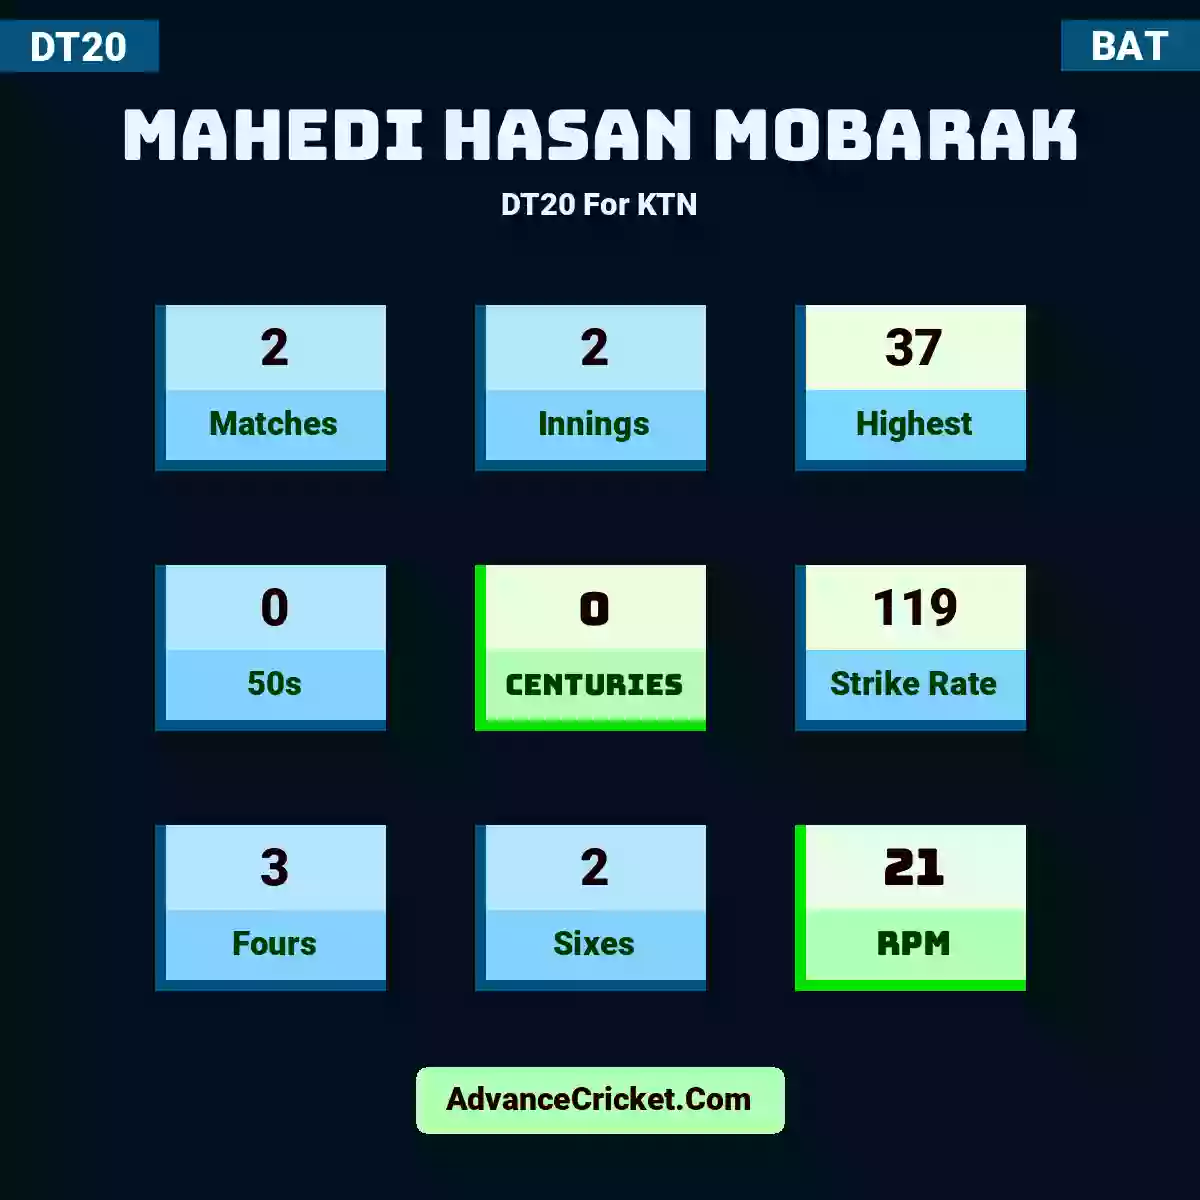 Mahedi Hasan Mobarak DT20  For KTN, Mahedi Hasan Mobarak played 2 matches, scored 37 runs as highest, 0 half-centuries, and 0 centuries, with a strike rate of 119. M.Hasan.Mobarak hit 3 fours and 2 sixes, with an RPM of 21.